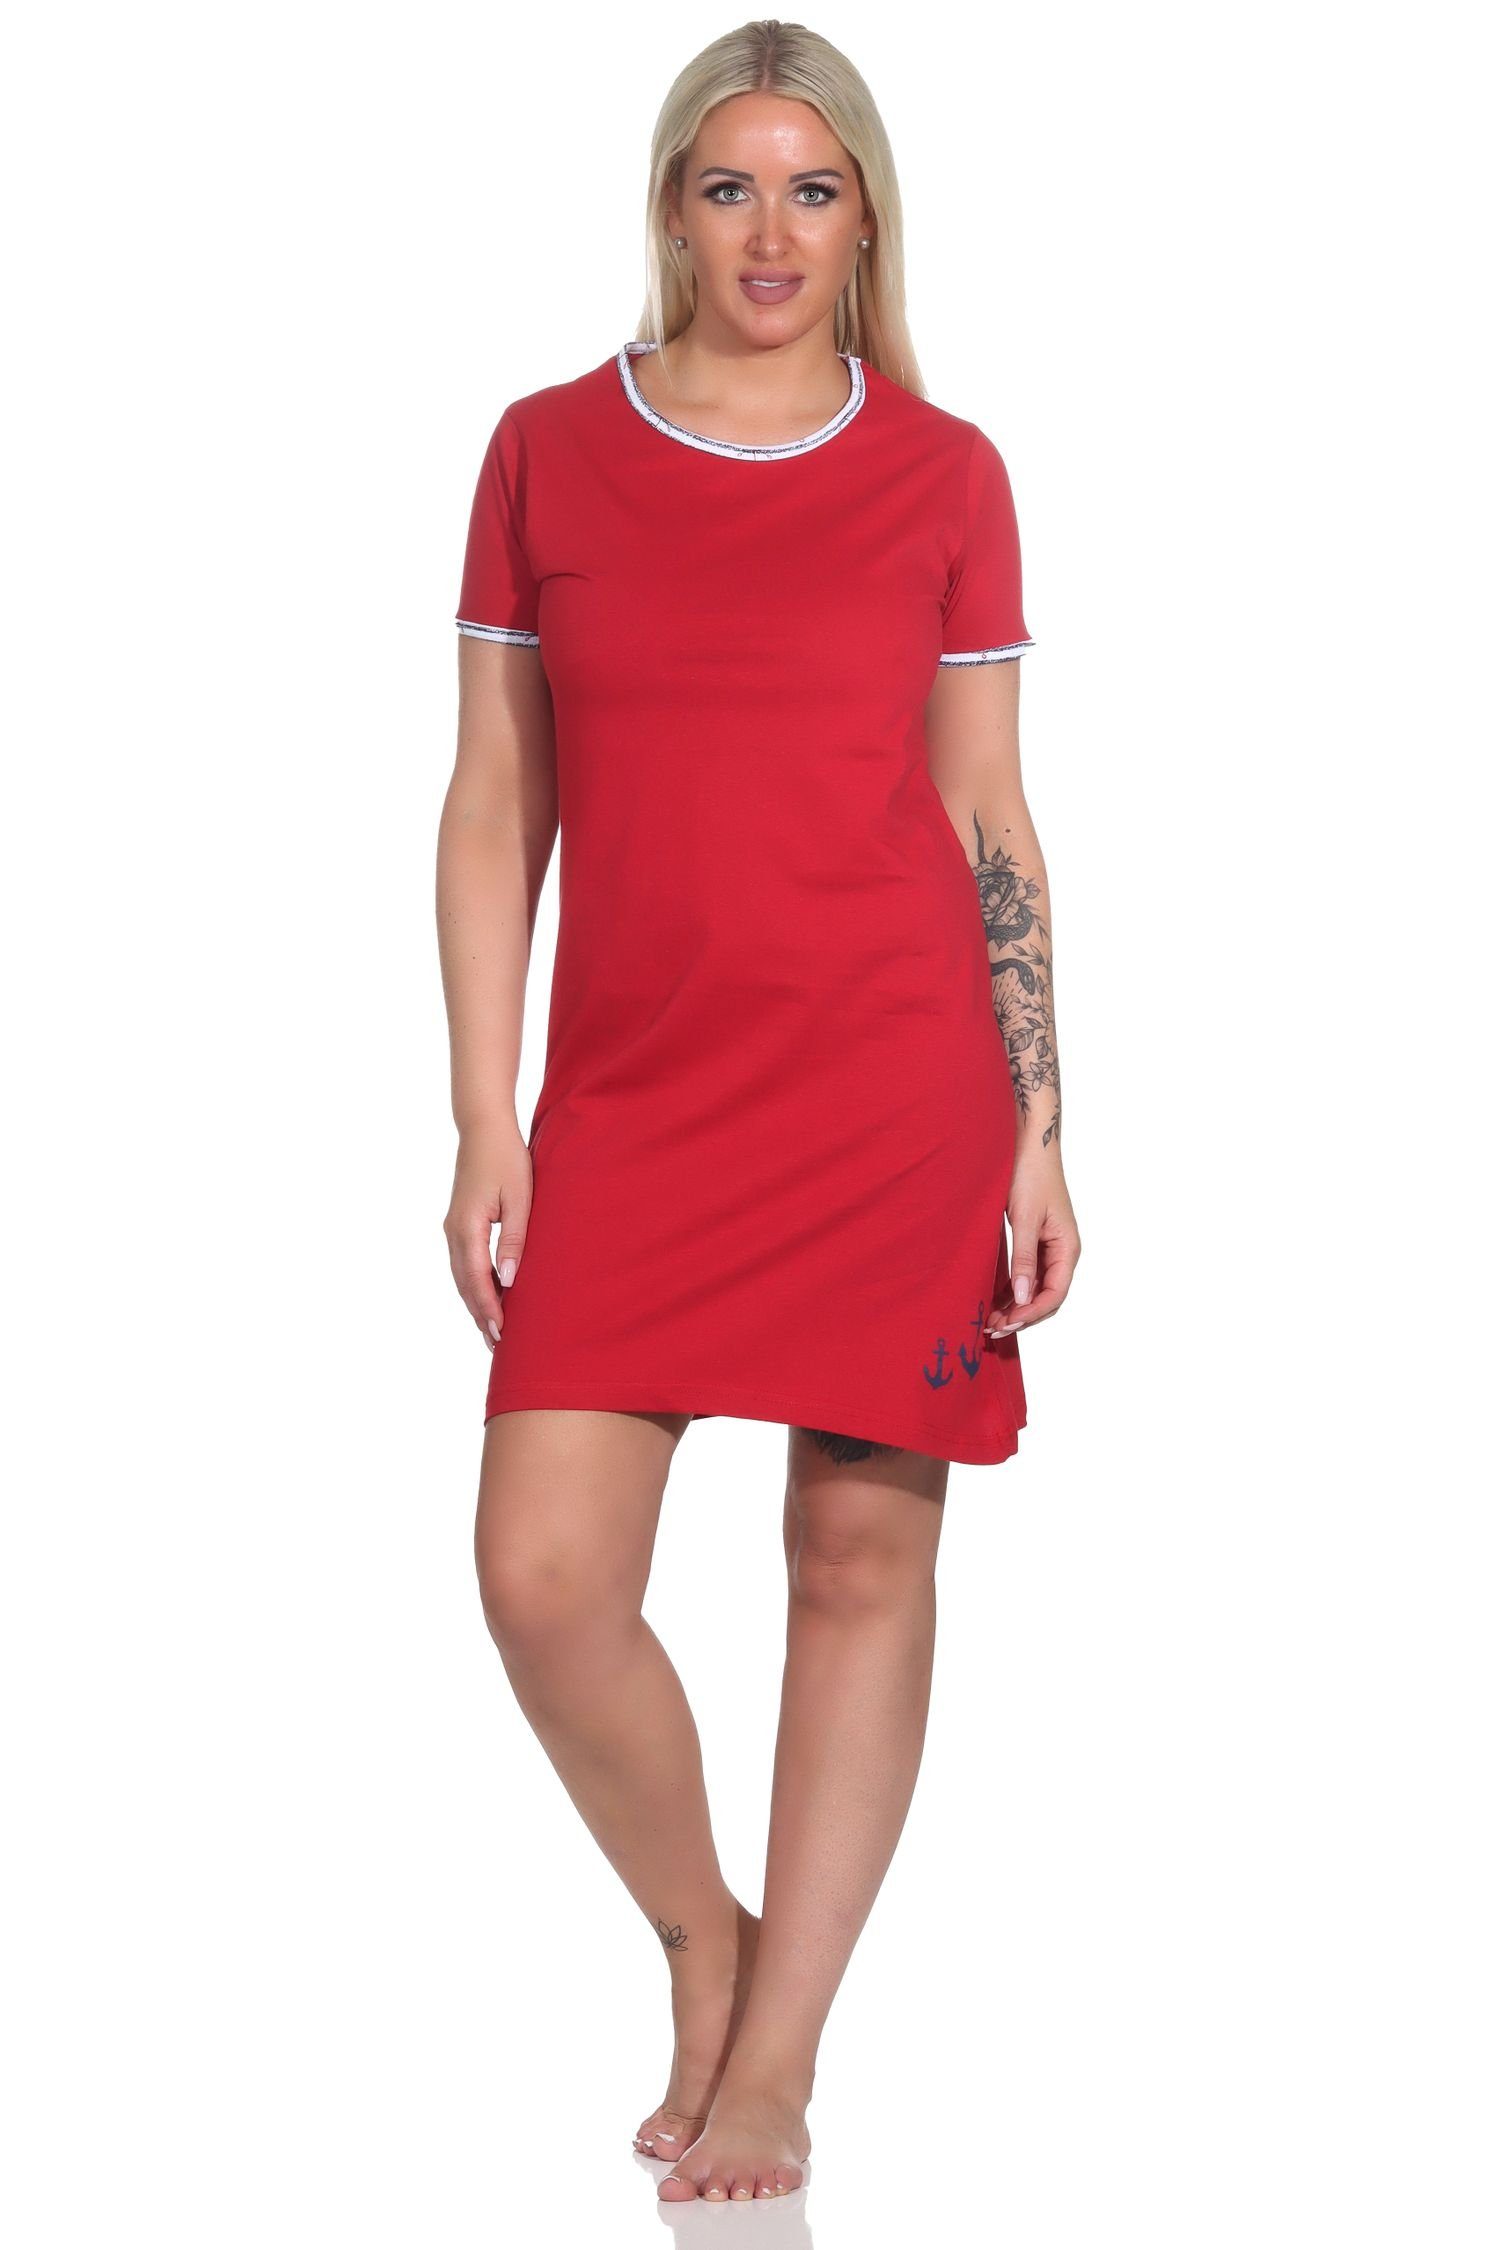 Rundhals Damen Maritimes Nachthemd Normann kurzärmliges mit Bigshirt Nachthemd, rot